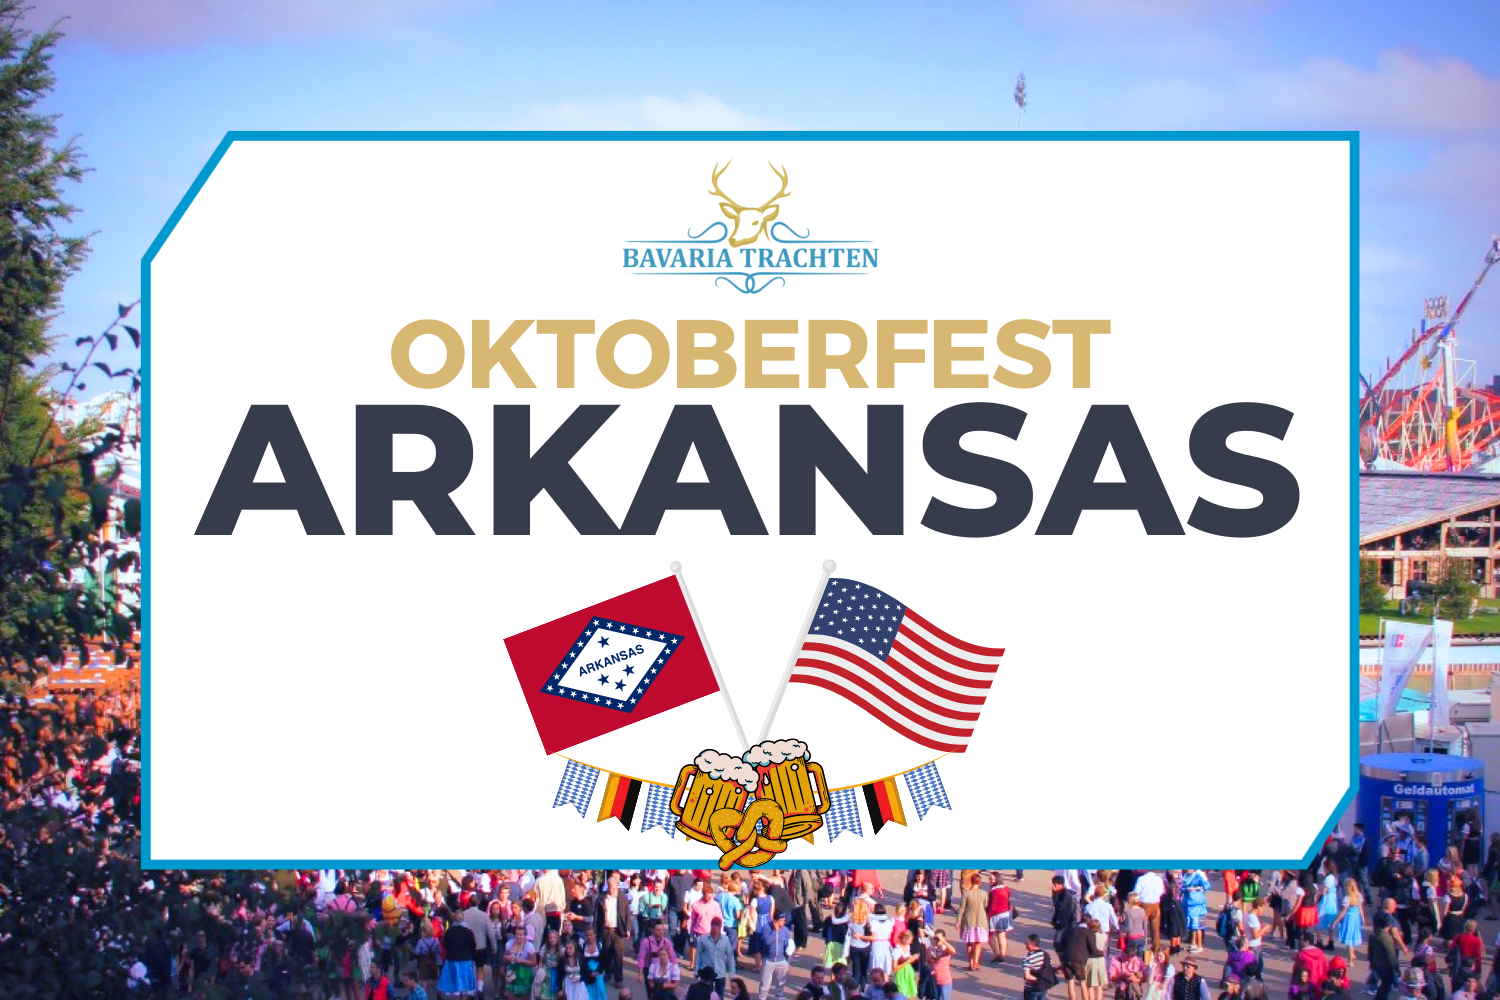 Arkansas' Festive Oktoberfest A Celebration of German Culture